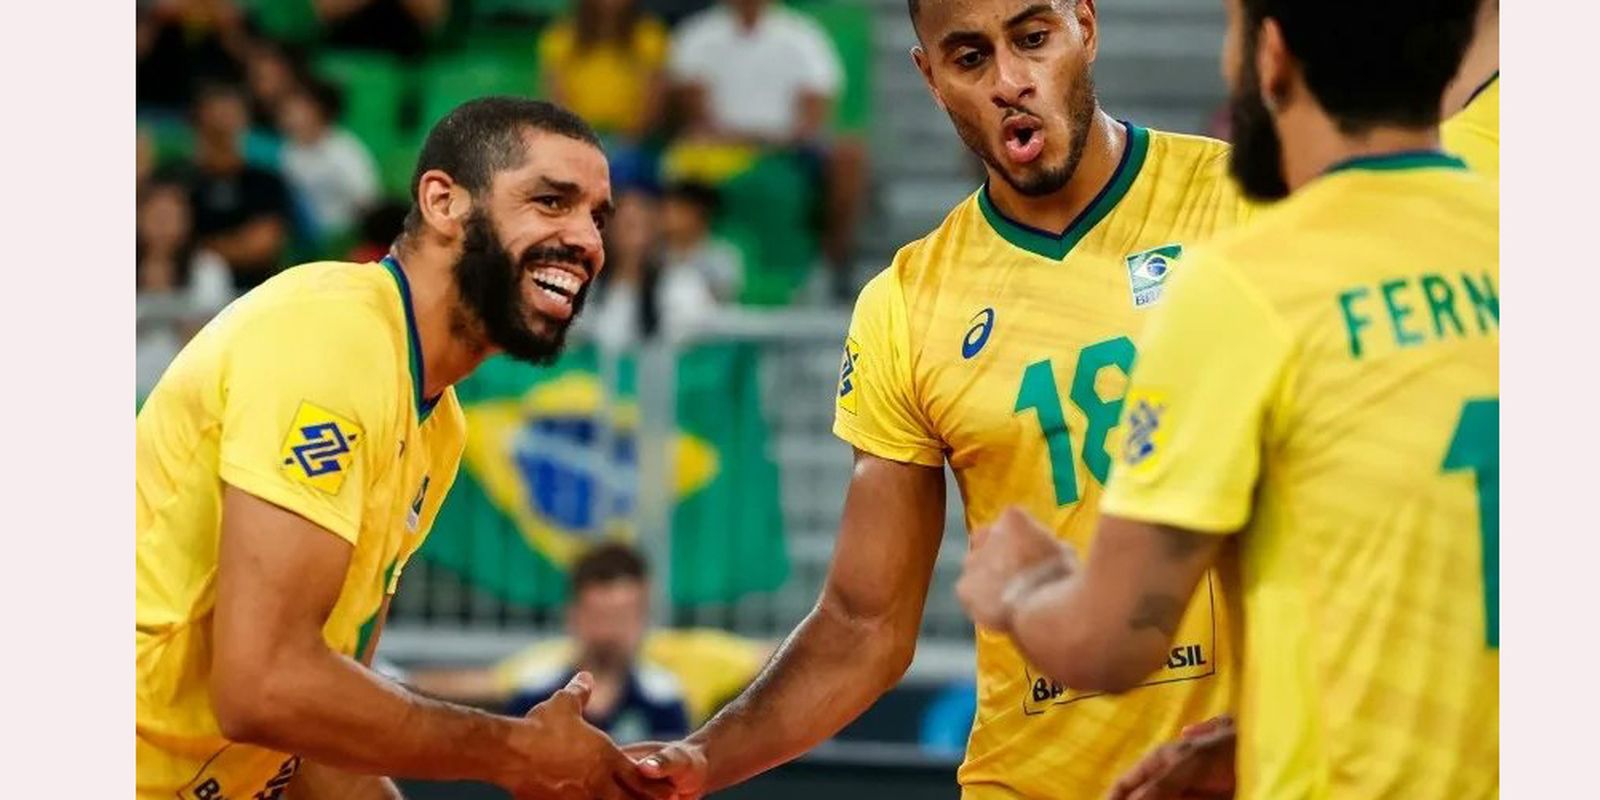 Vôlei: Brasil garante vaga nas oitavas do Mundial de vôlei masculino -  Superesportes